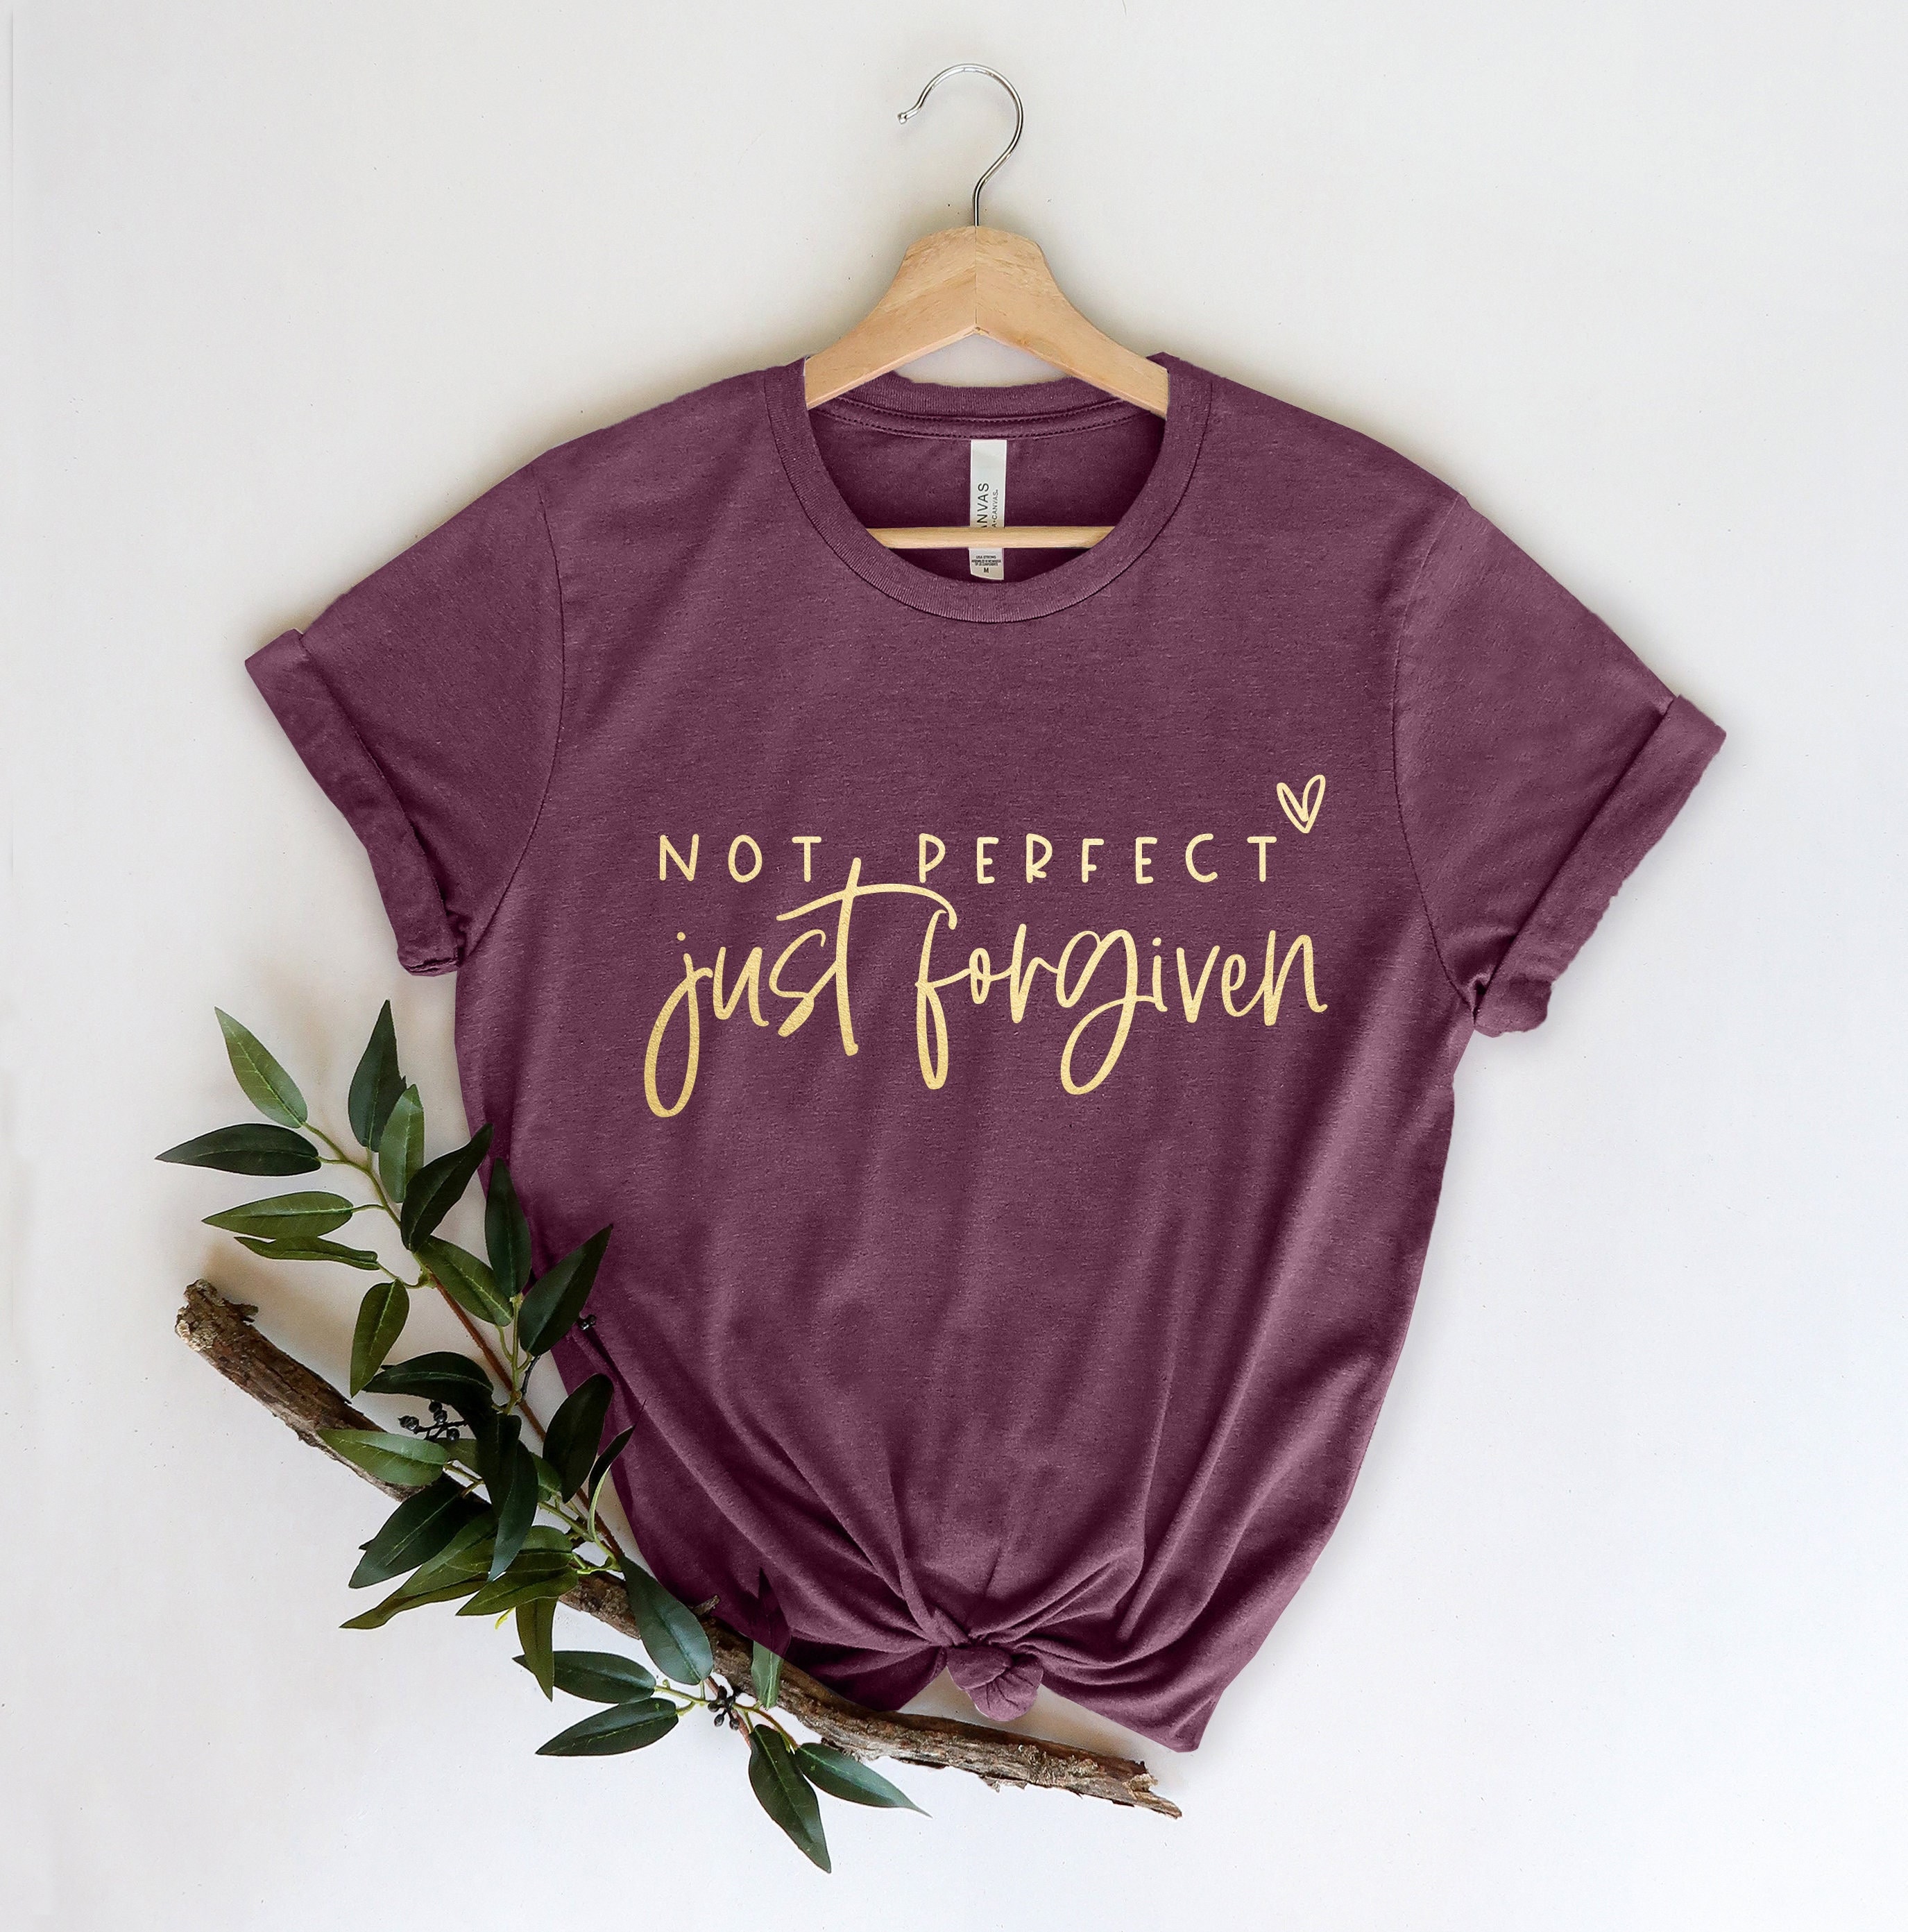 Not Perfect Just Forgiven Shirt, Christian Shirt, Religious Gifts Shirt